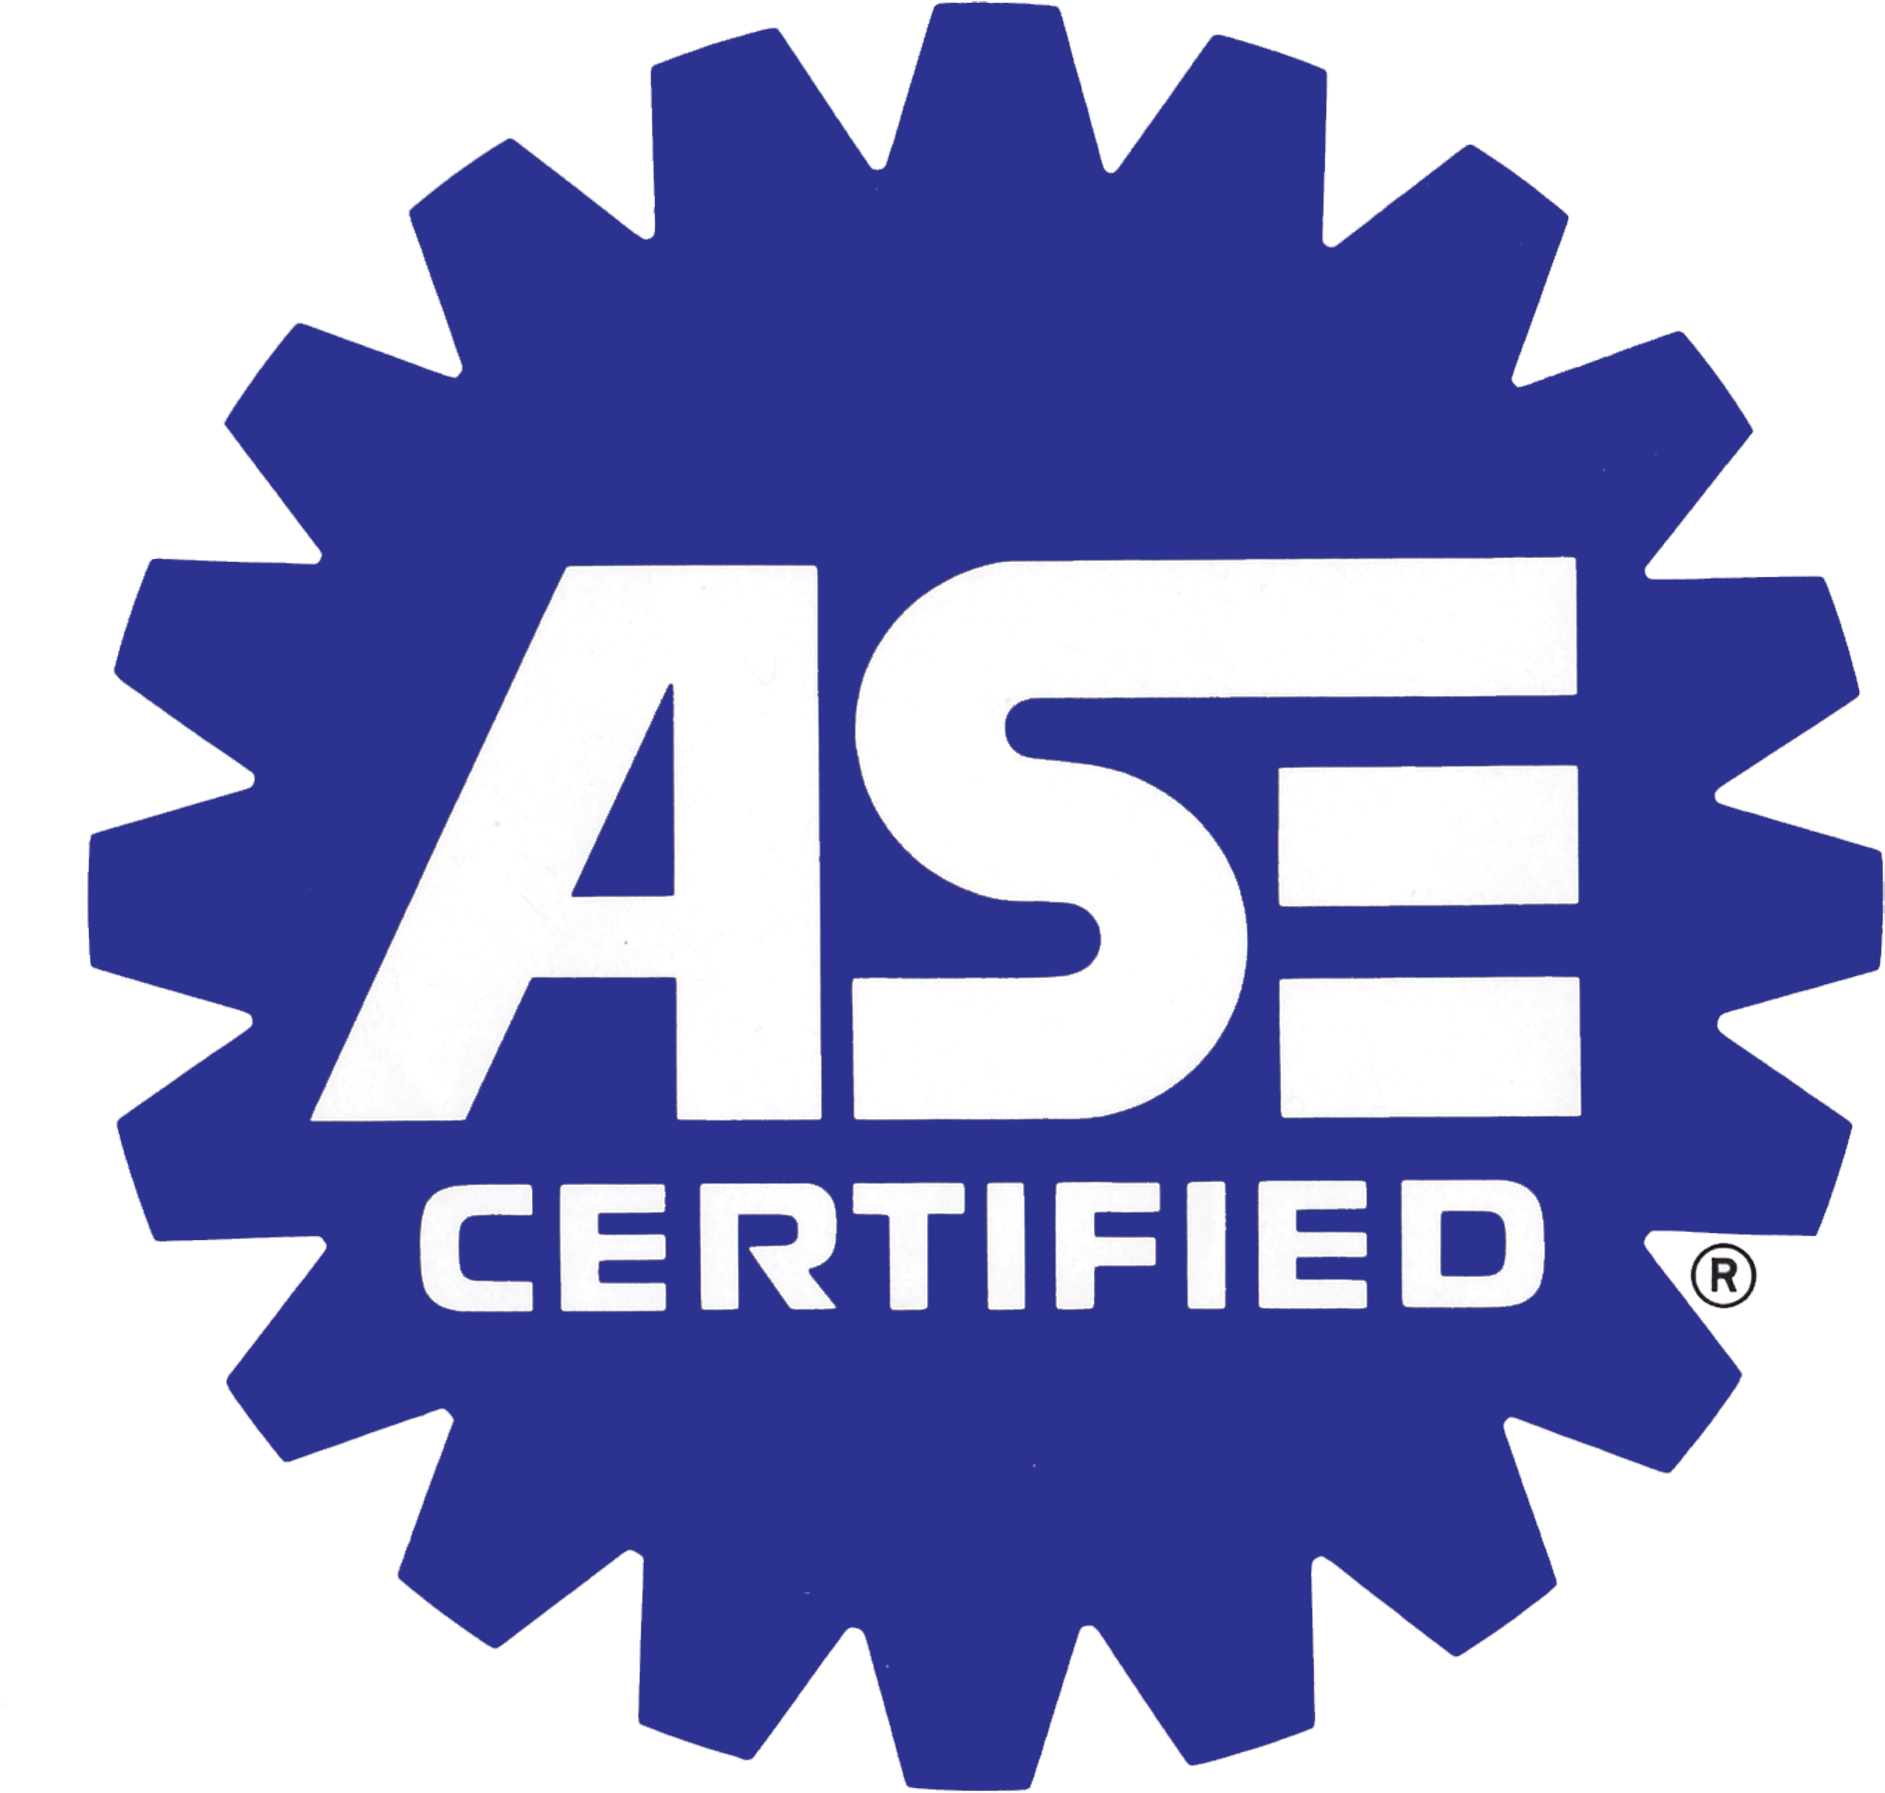 Certified Logo PNG Vectors Free Download